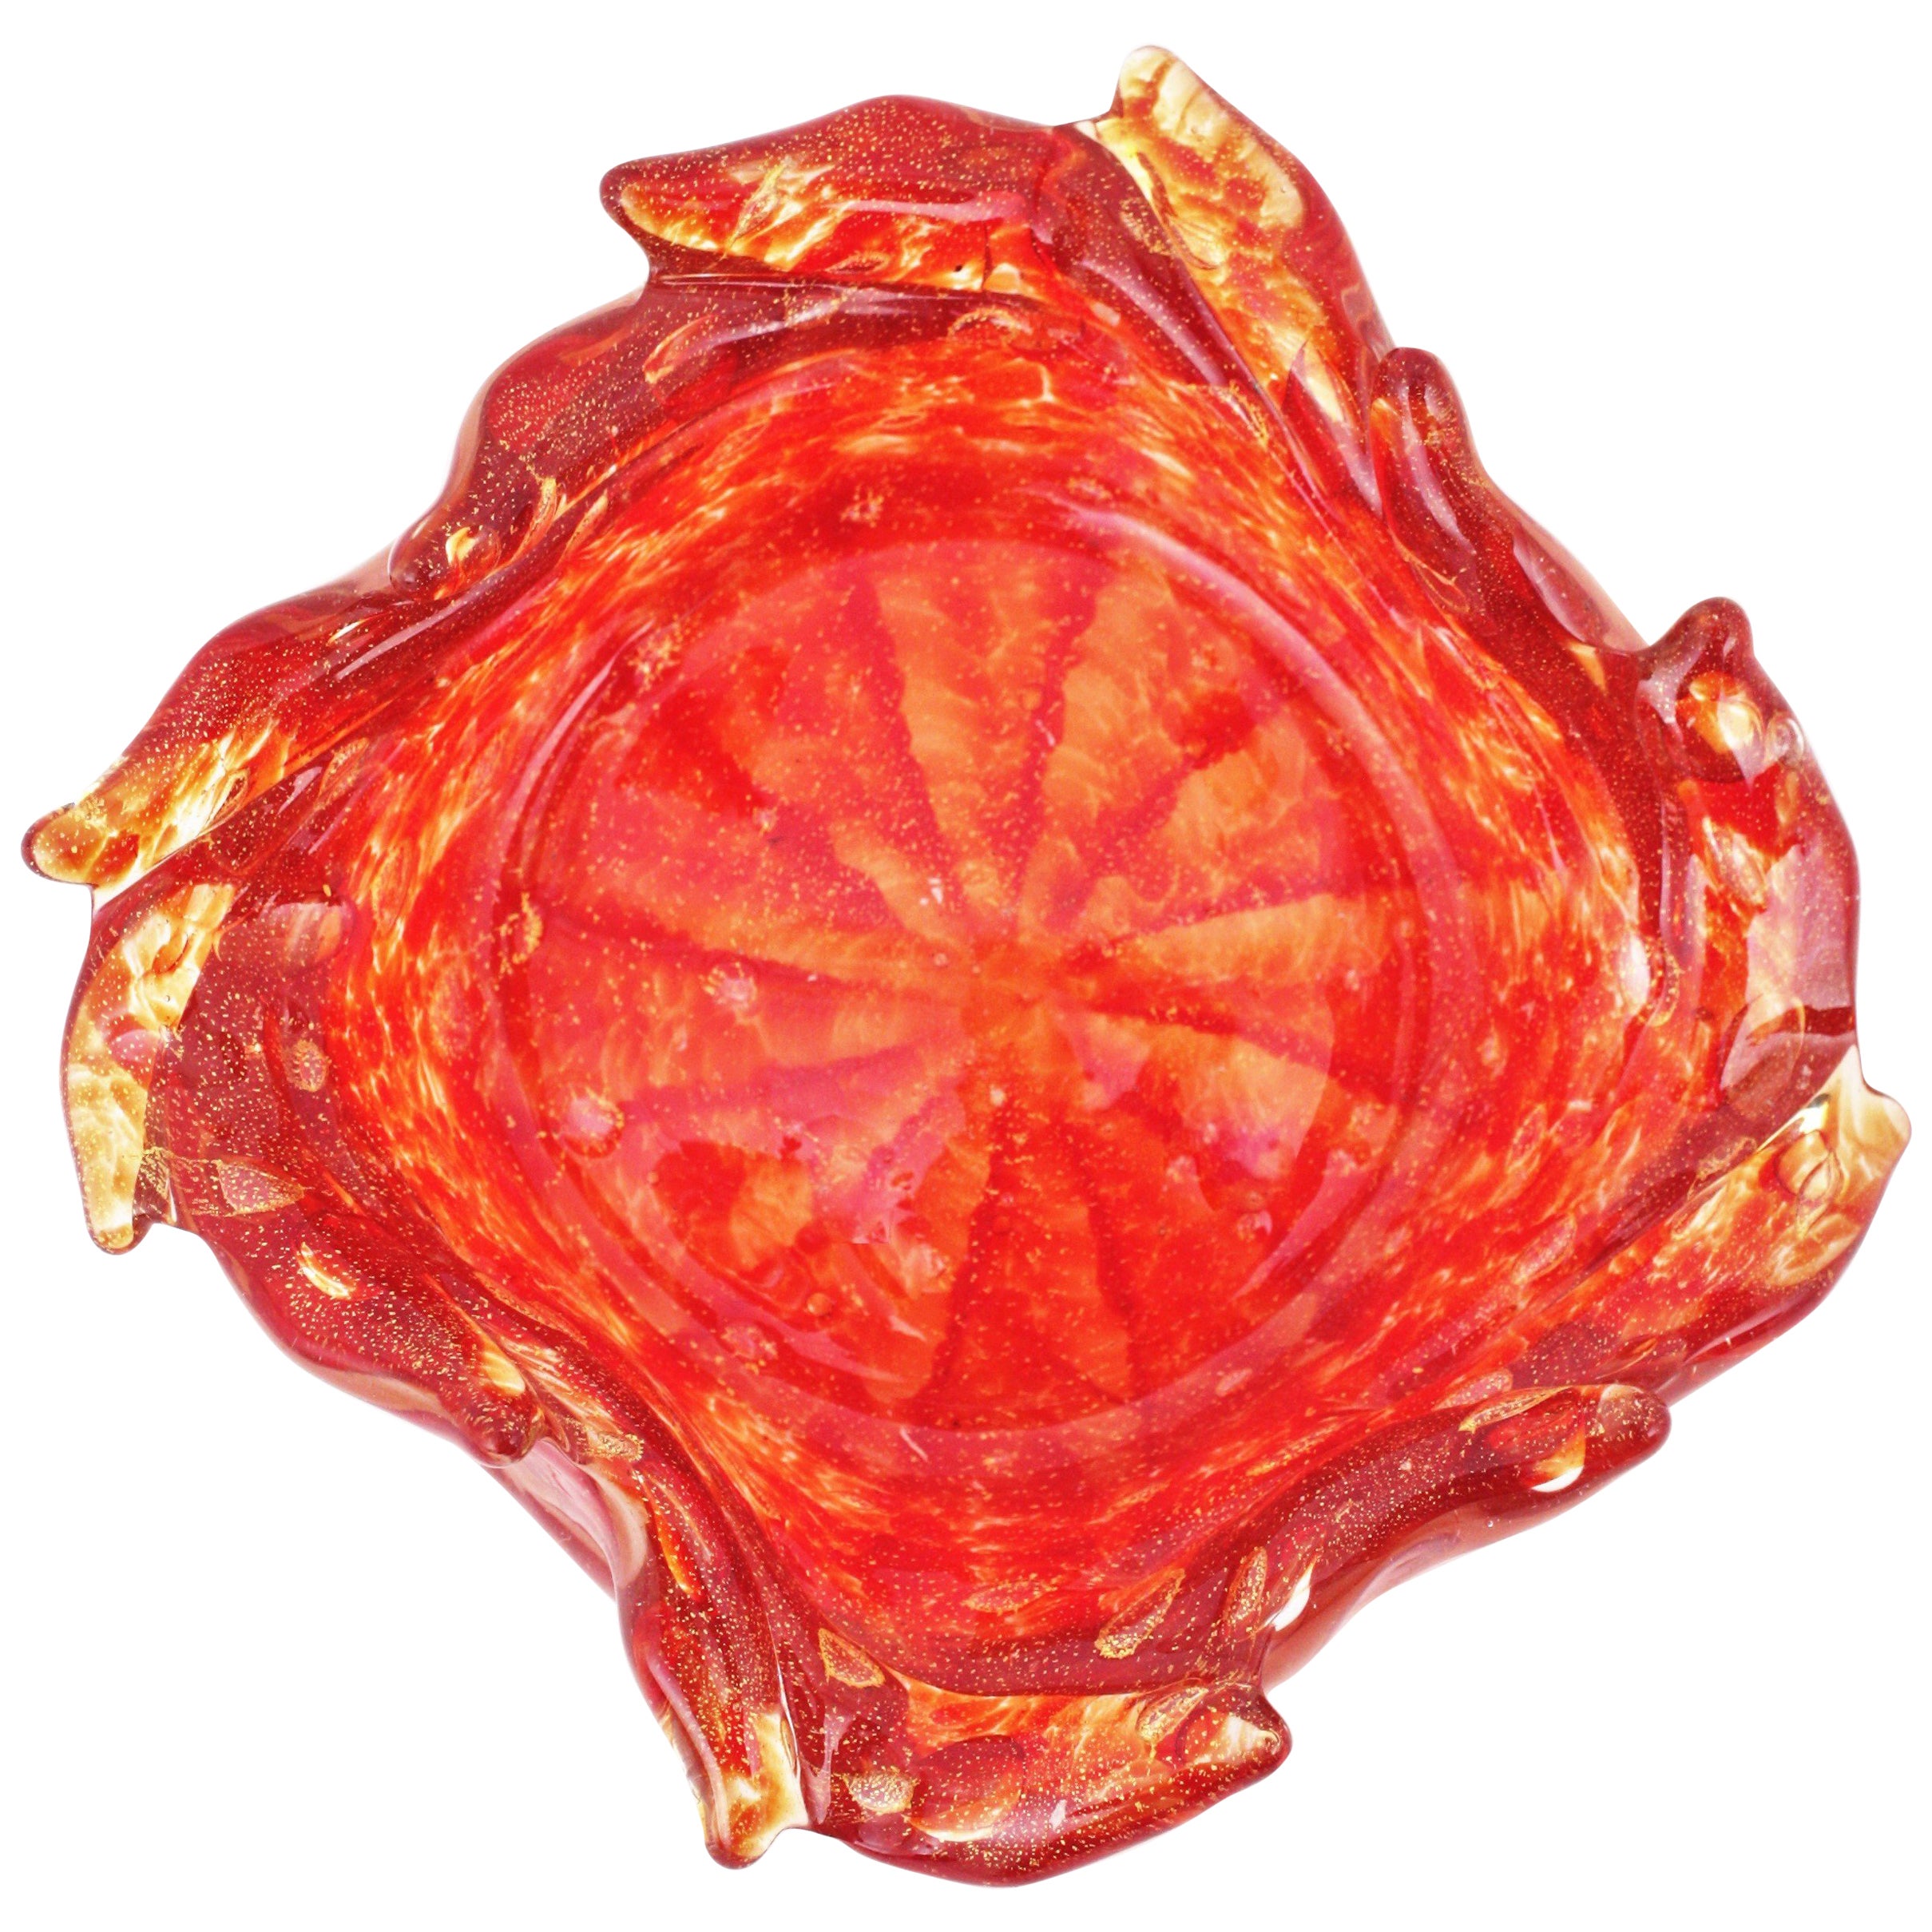 Barovier Toso Murano Orange Red Swirl Art Glass Bowl with Gold Flecks